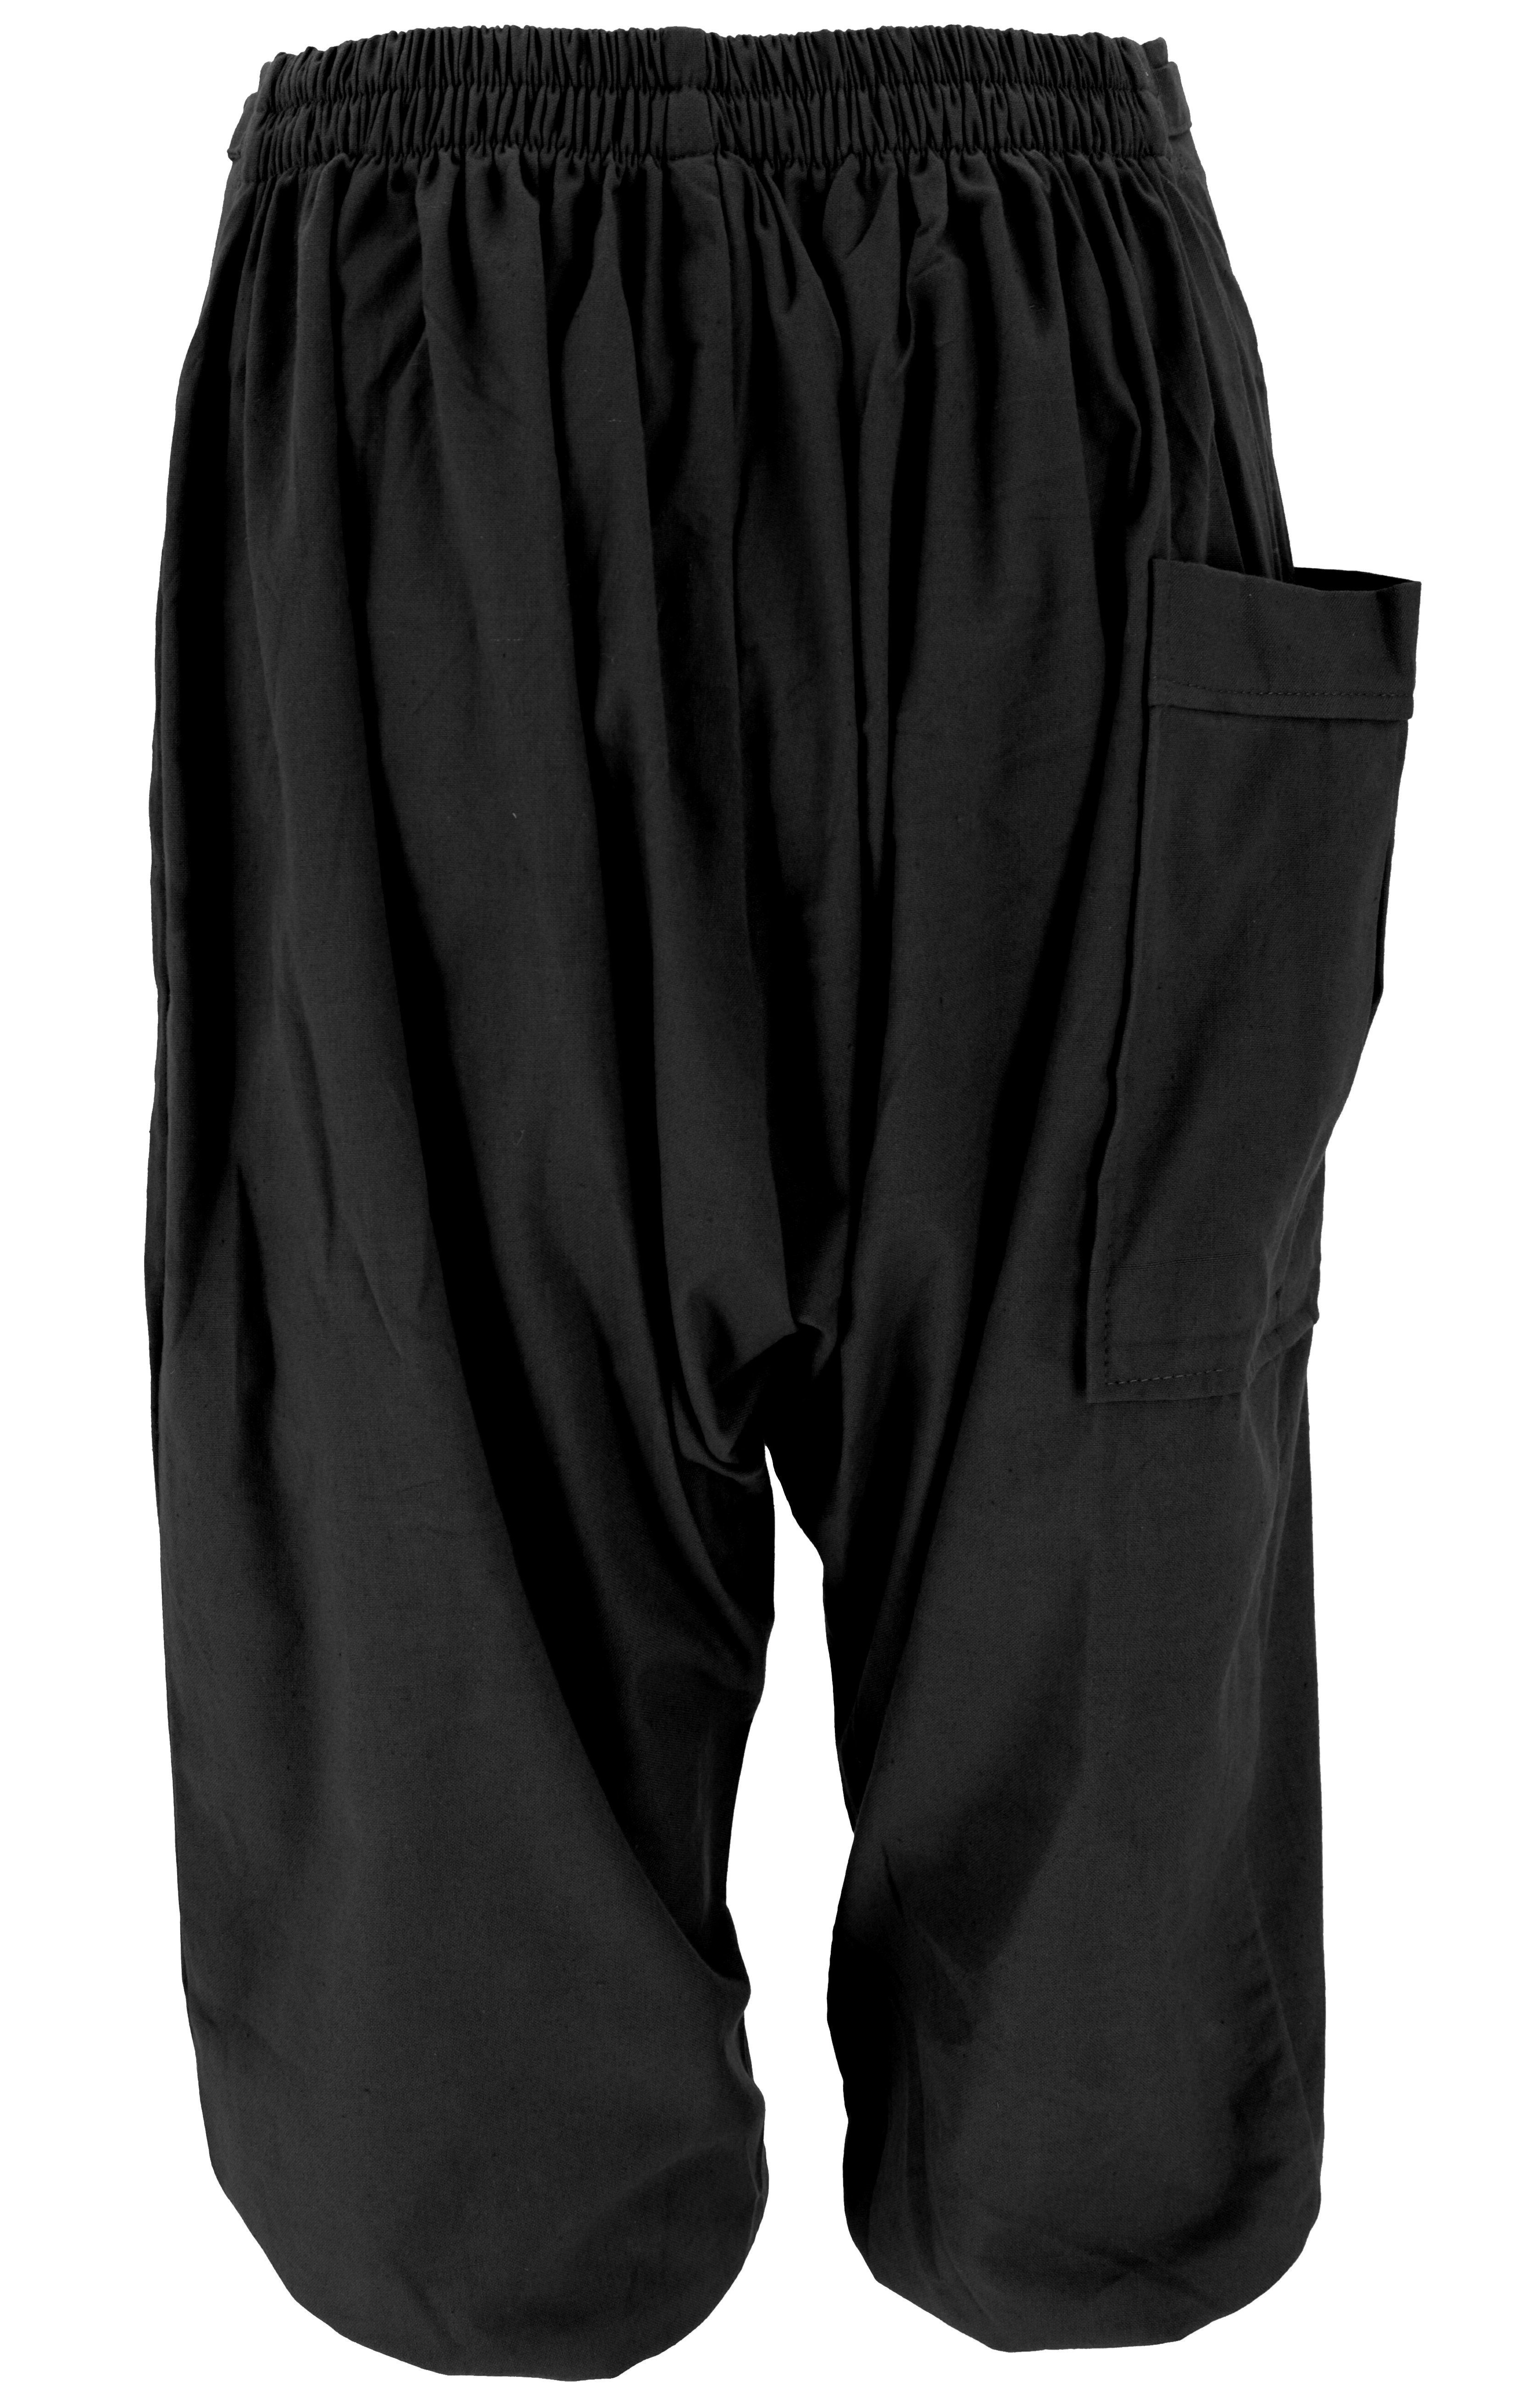 Ethno alternative - Baggy Guru-Shop schwarz Hose Relaxhose Bekleidung Sarouel Shorts, Style,